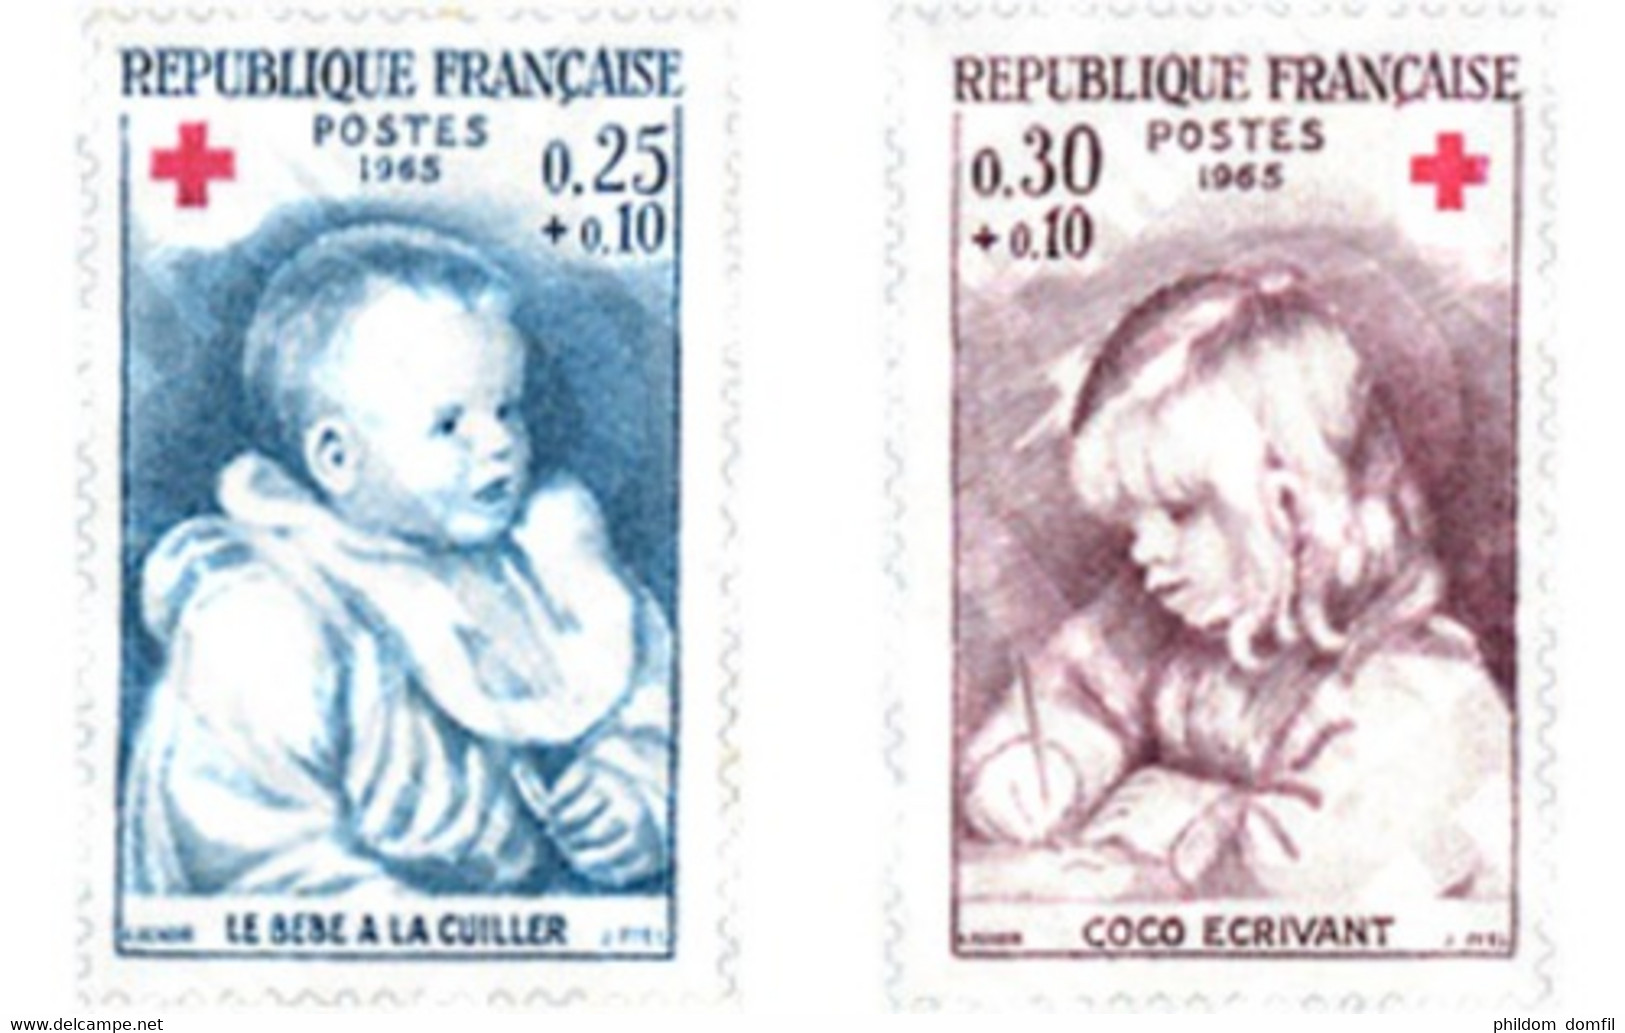 Ref. 122064 * MNH * - FRANCE. 1965. RED CROSS WELFARE FUND . PRO CRUZ ROJA - Red Cross